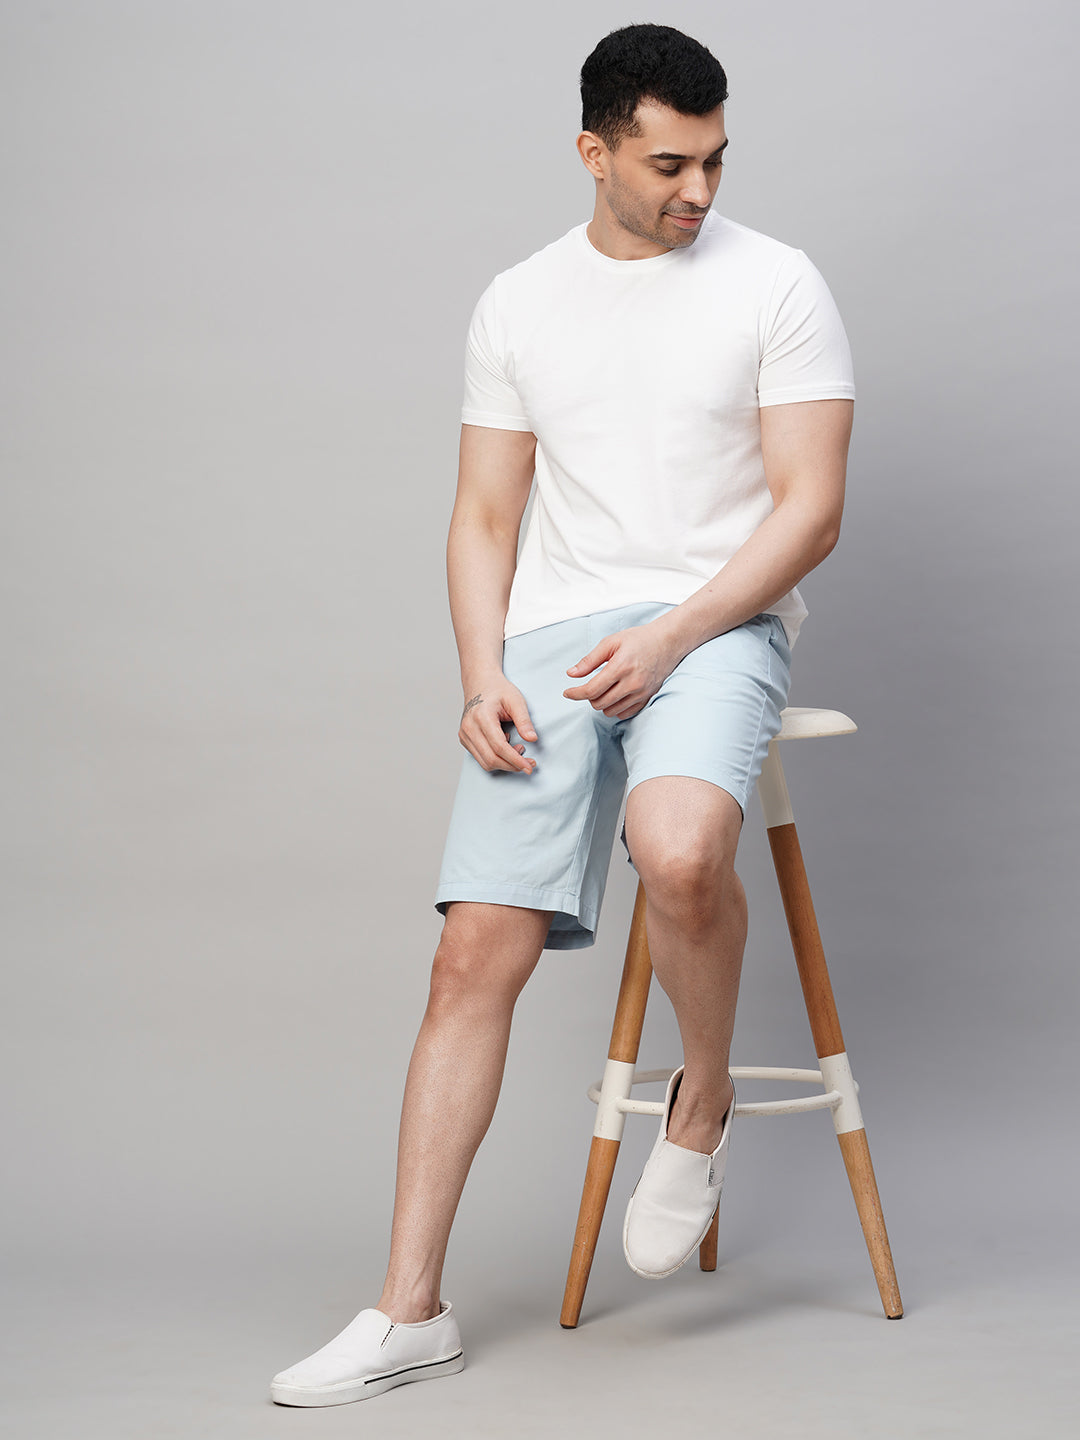 Men's Light Blue Cotton  Regular Fit Shorts